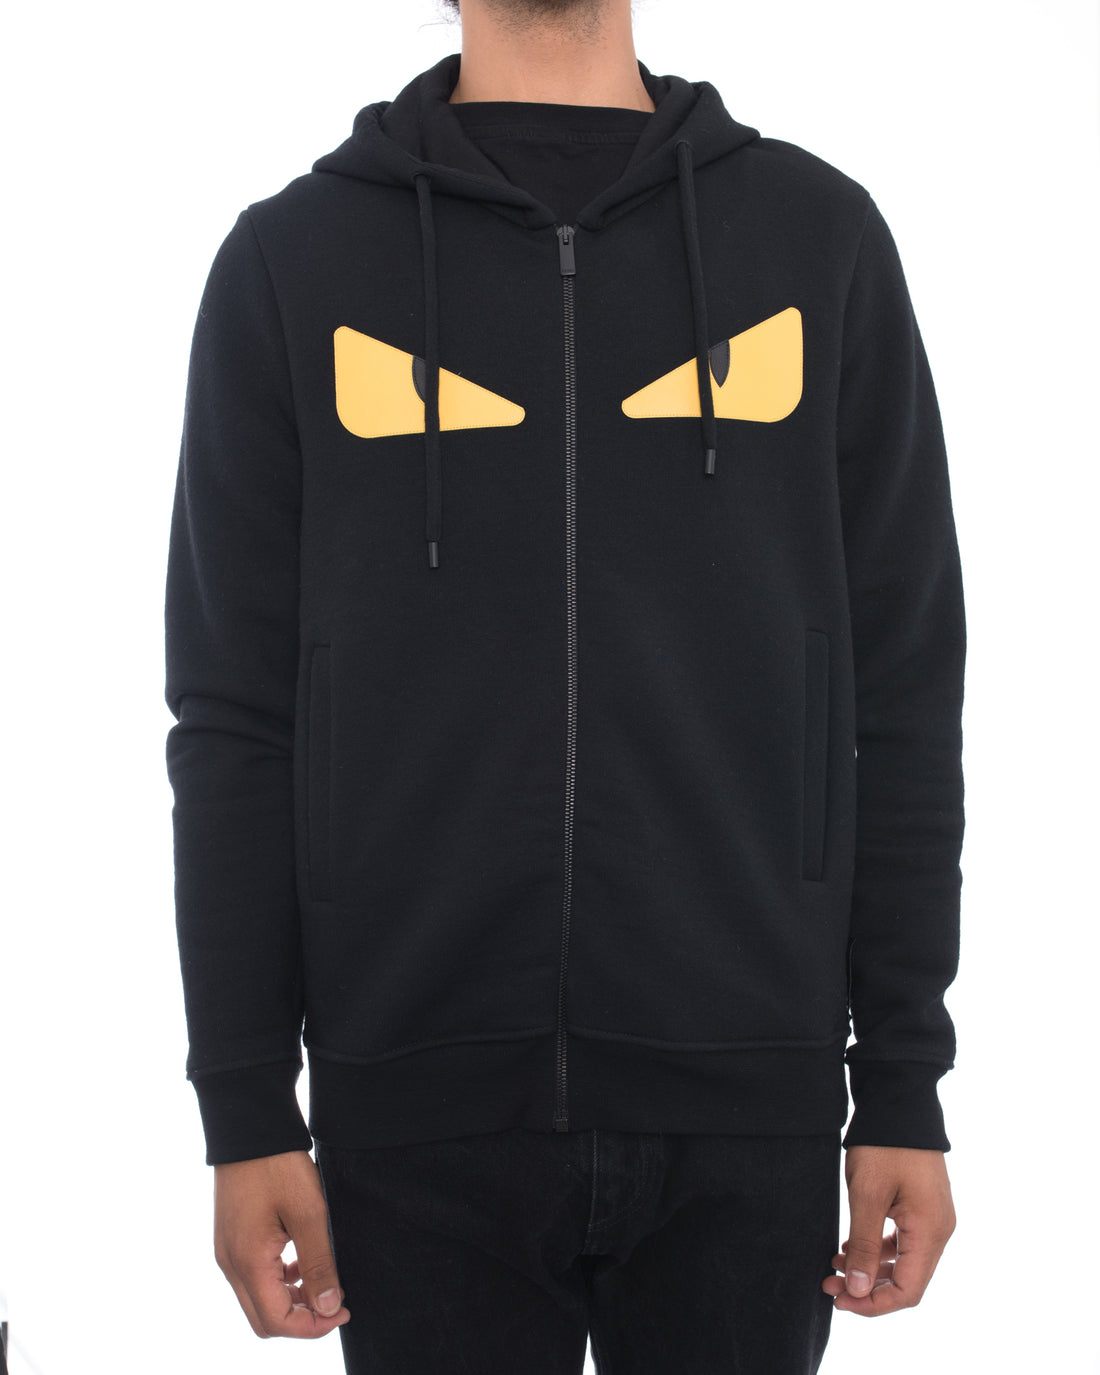 Fendi Monster Black Hoodie Sweatshirt with Yellow Eyes - 48